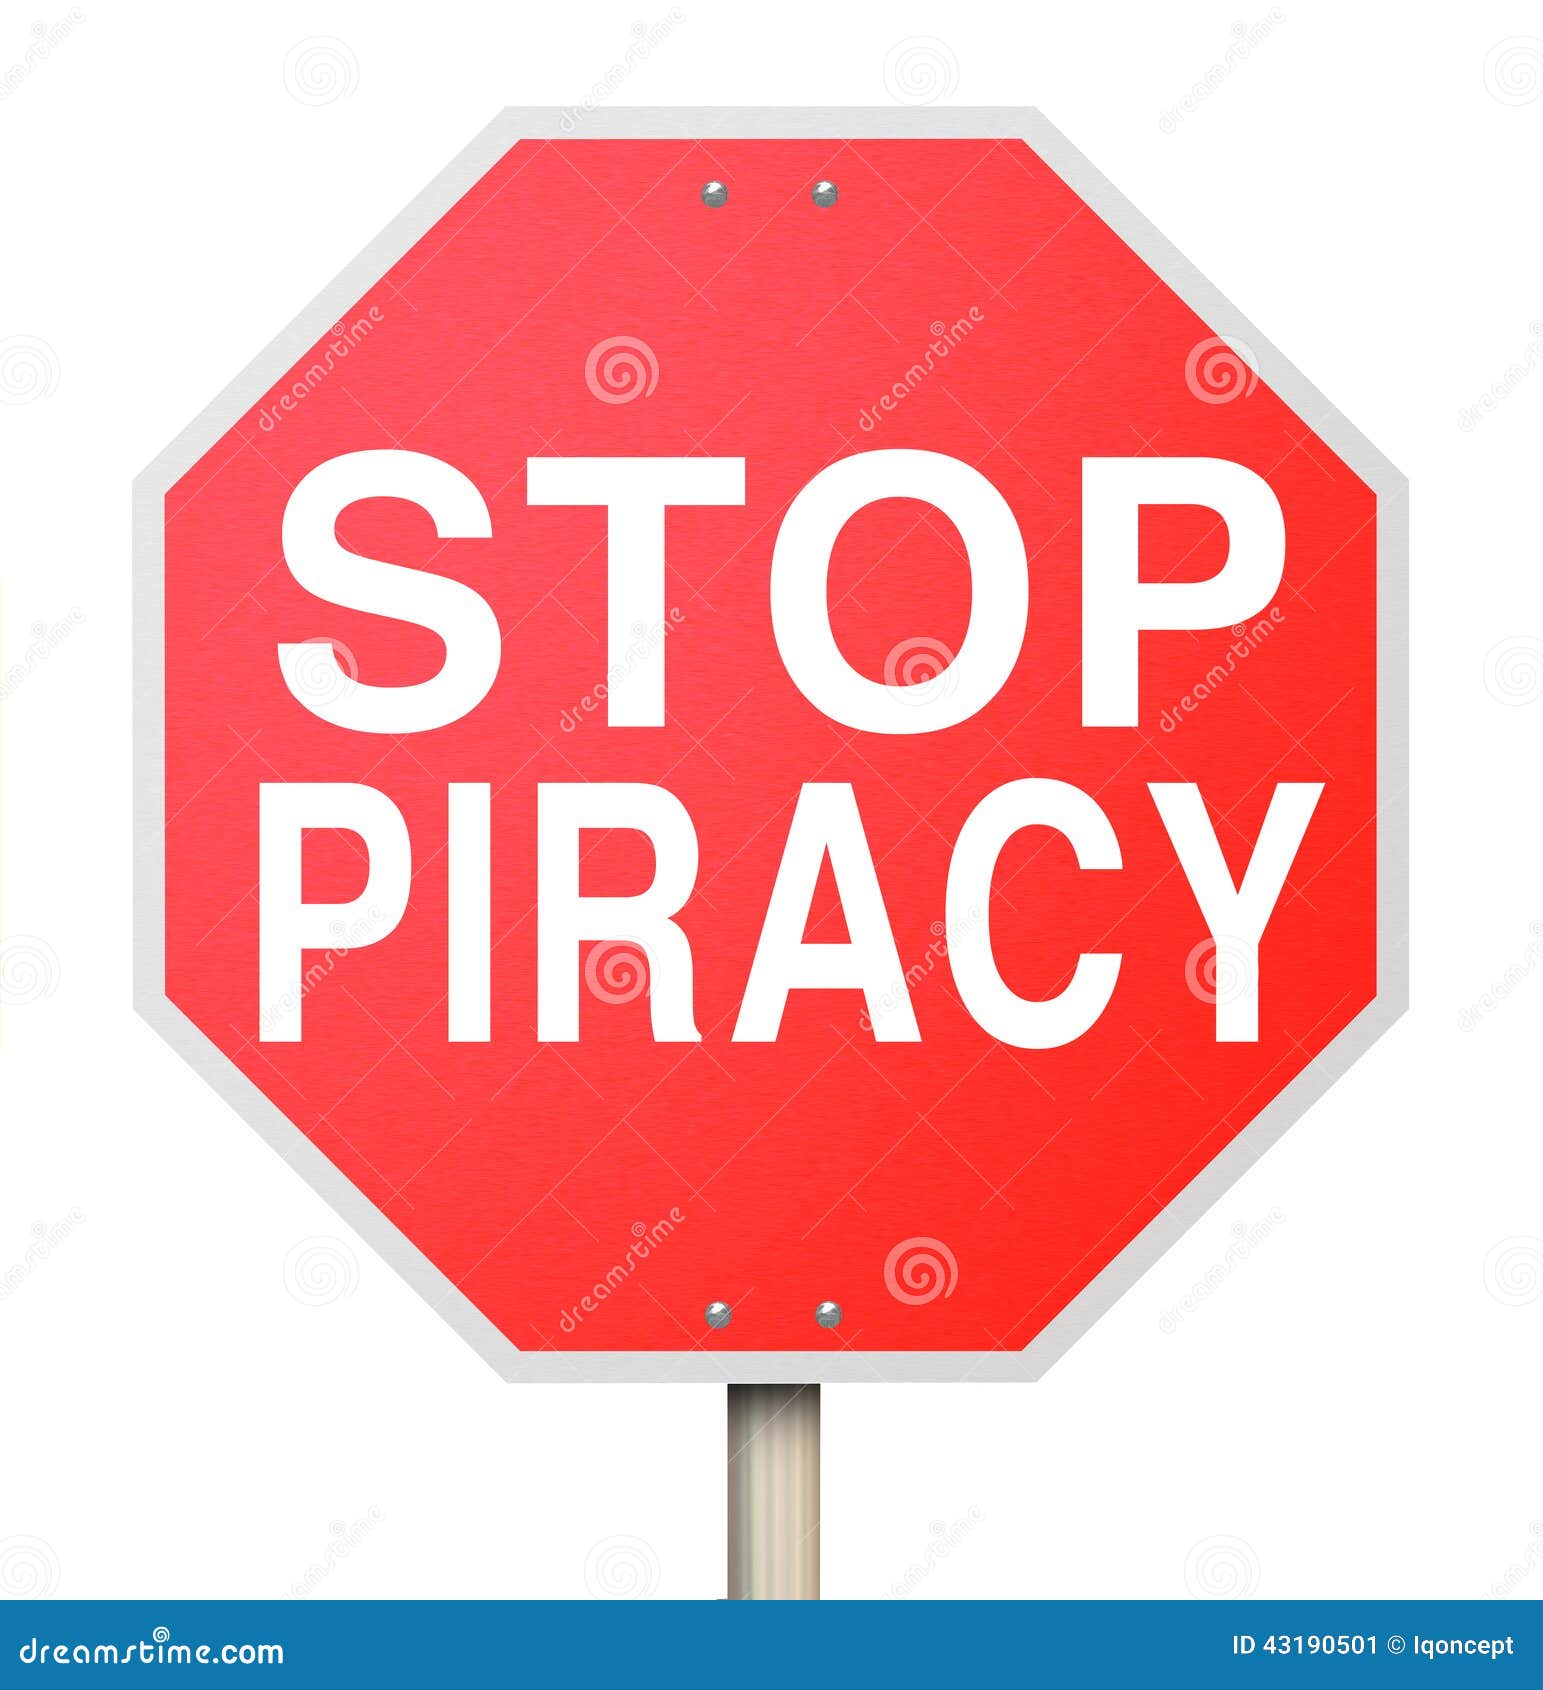 stop piracy illegal file sharing internet torrent websites